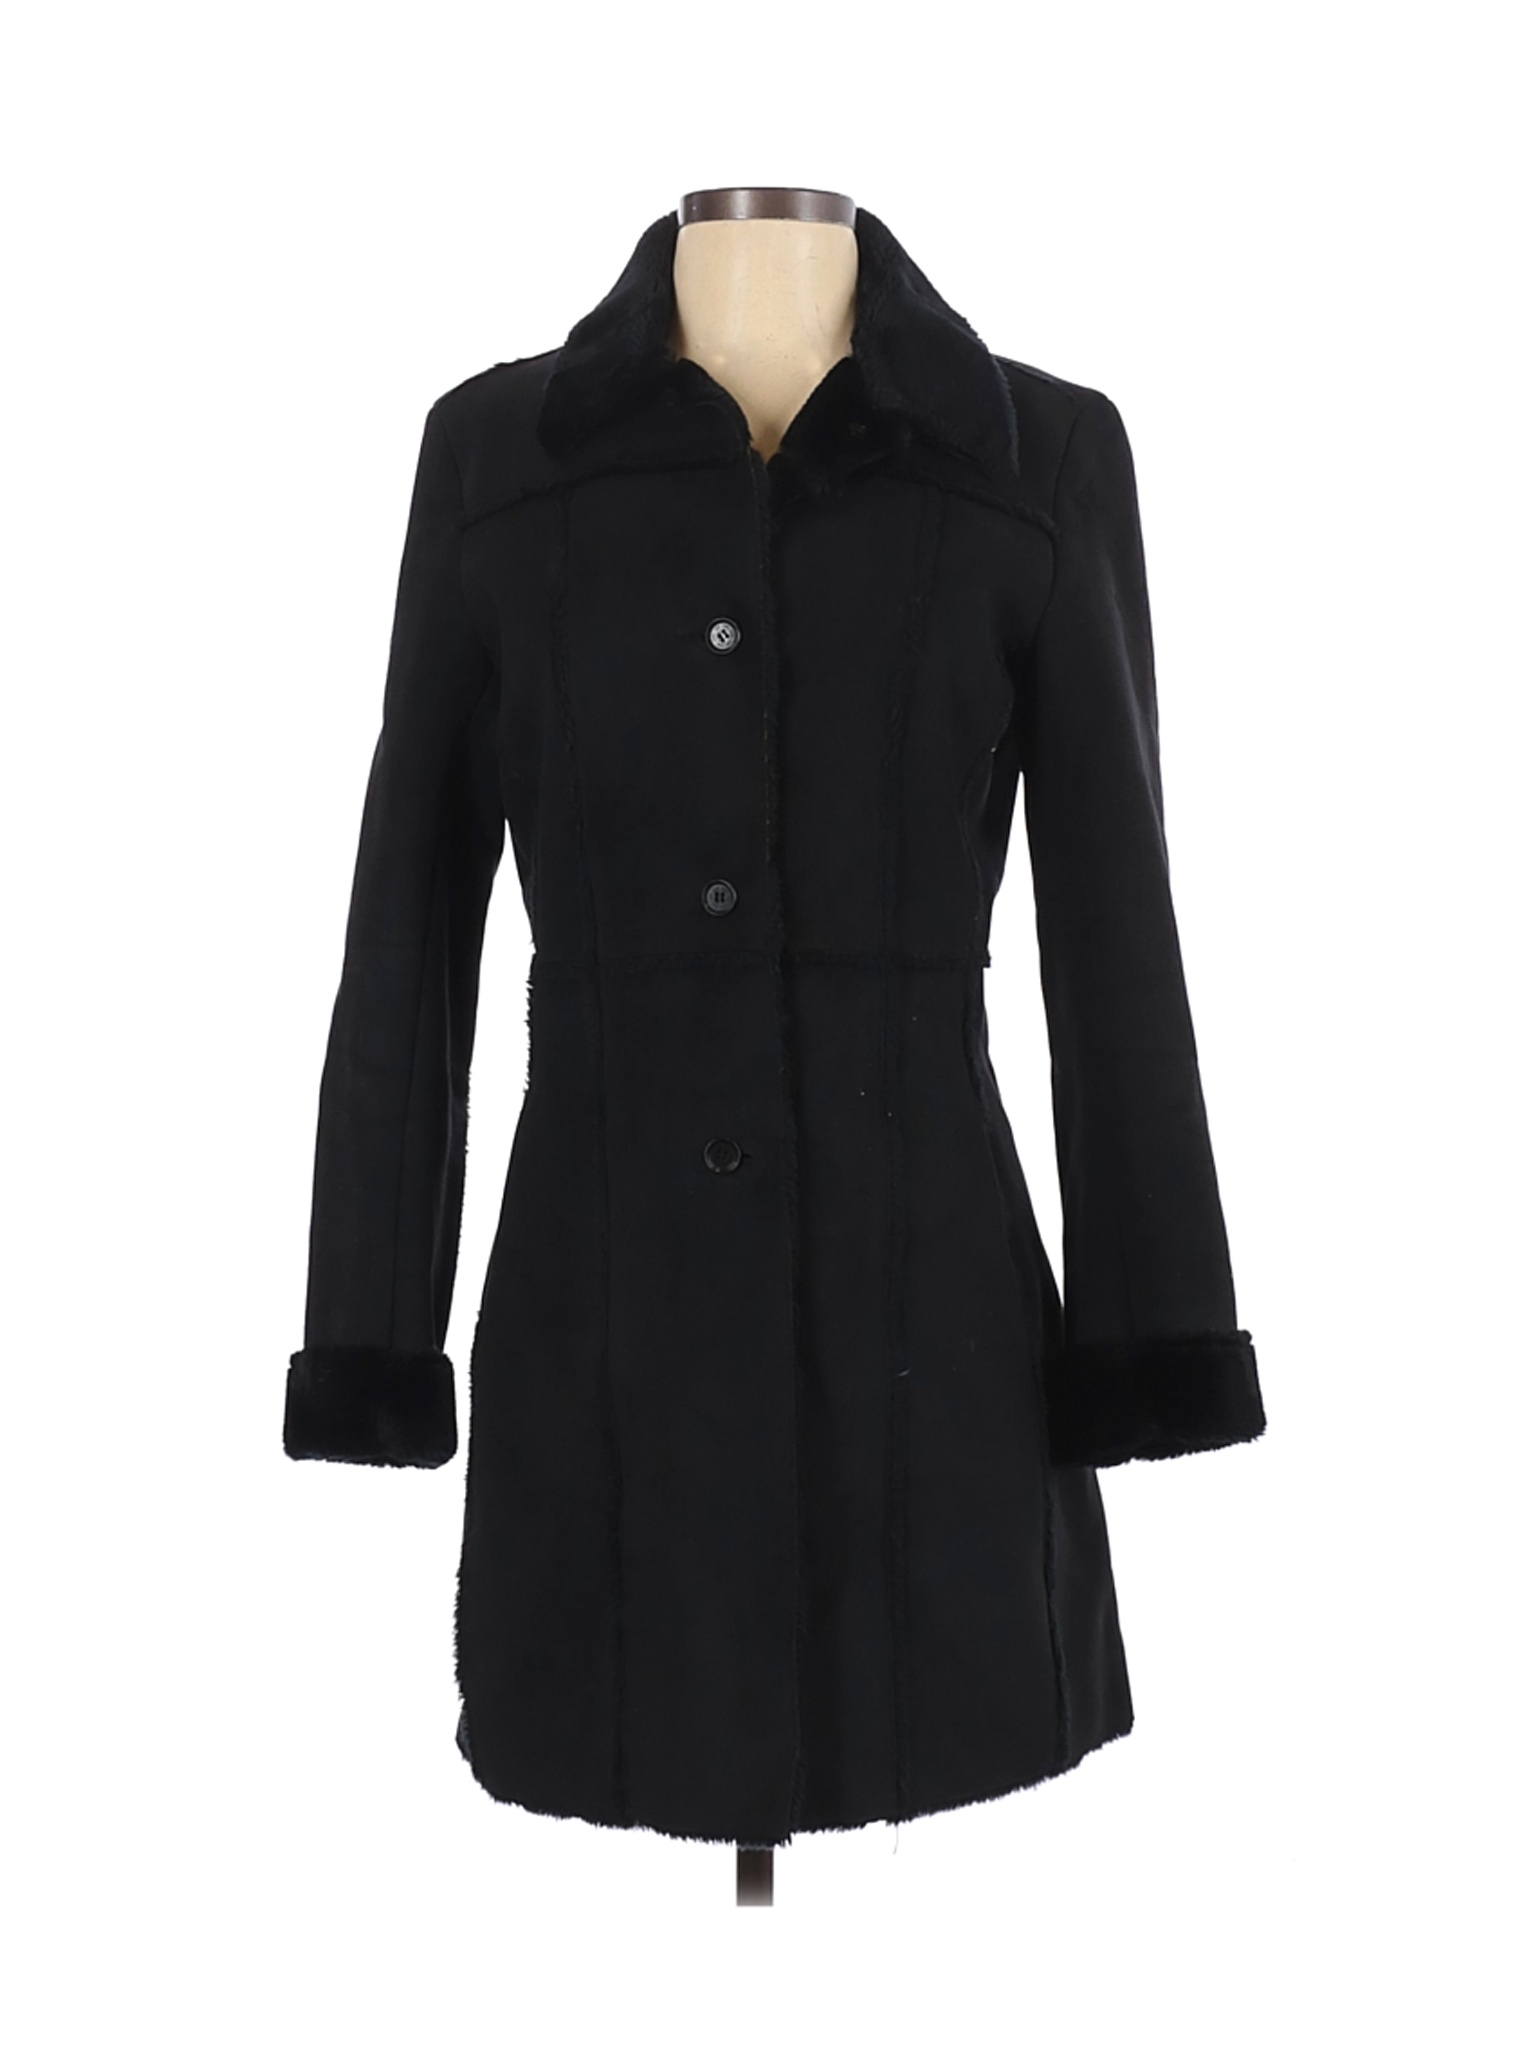 Marc New York Women Black Coat XS | eBay